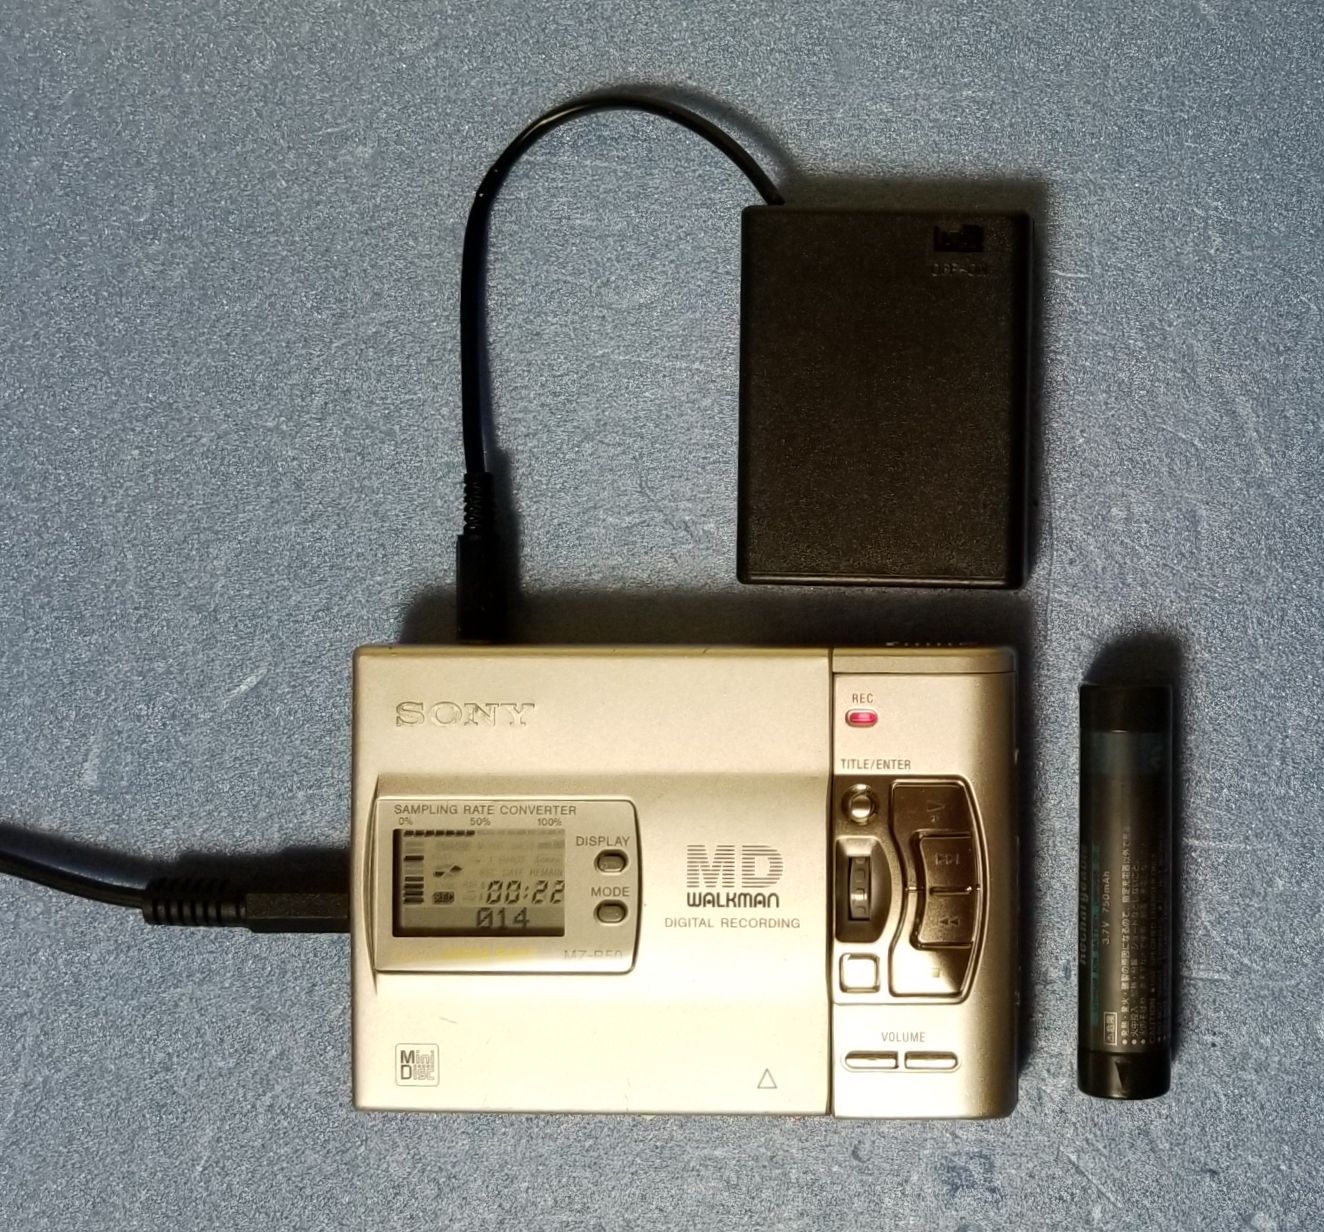 MDポータブルレコーダー SONY MZ-R50 MDLP非対応 録音良好・完動品 | 驚愕の高音質！MD・DAT・MTR・etc のレビュー